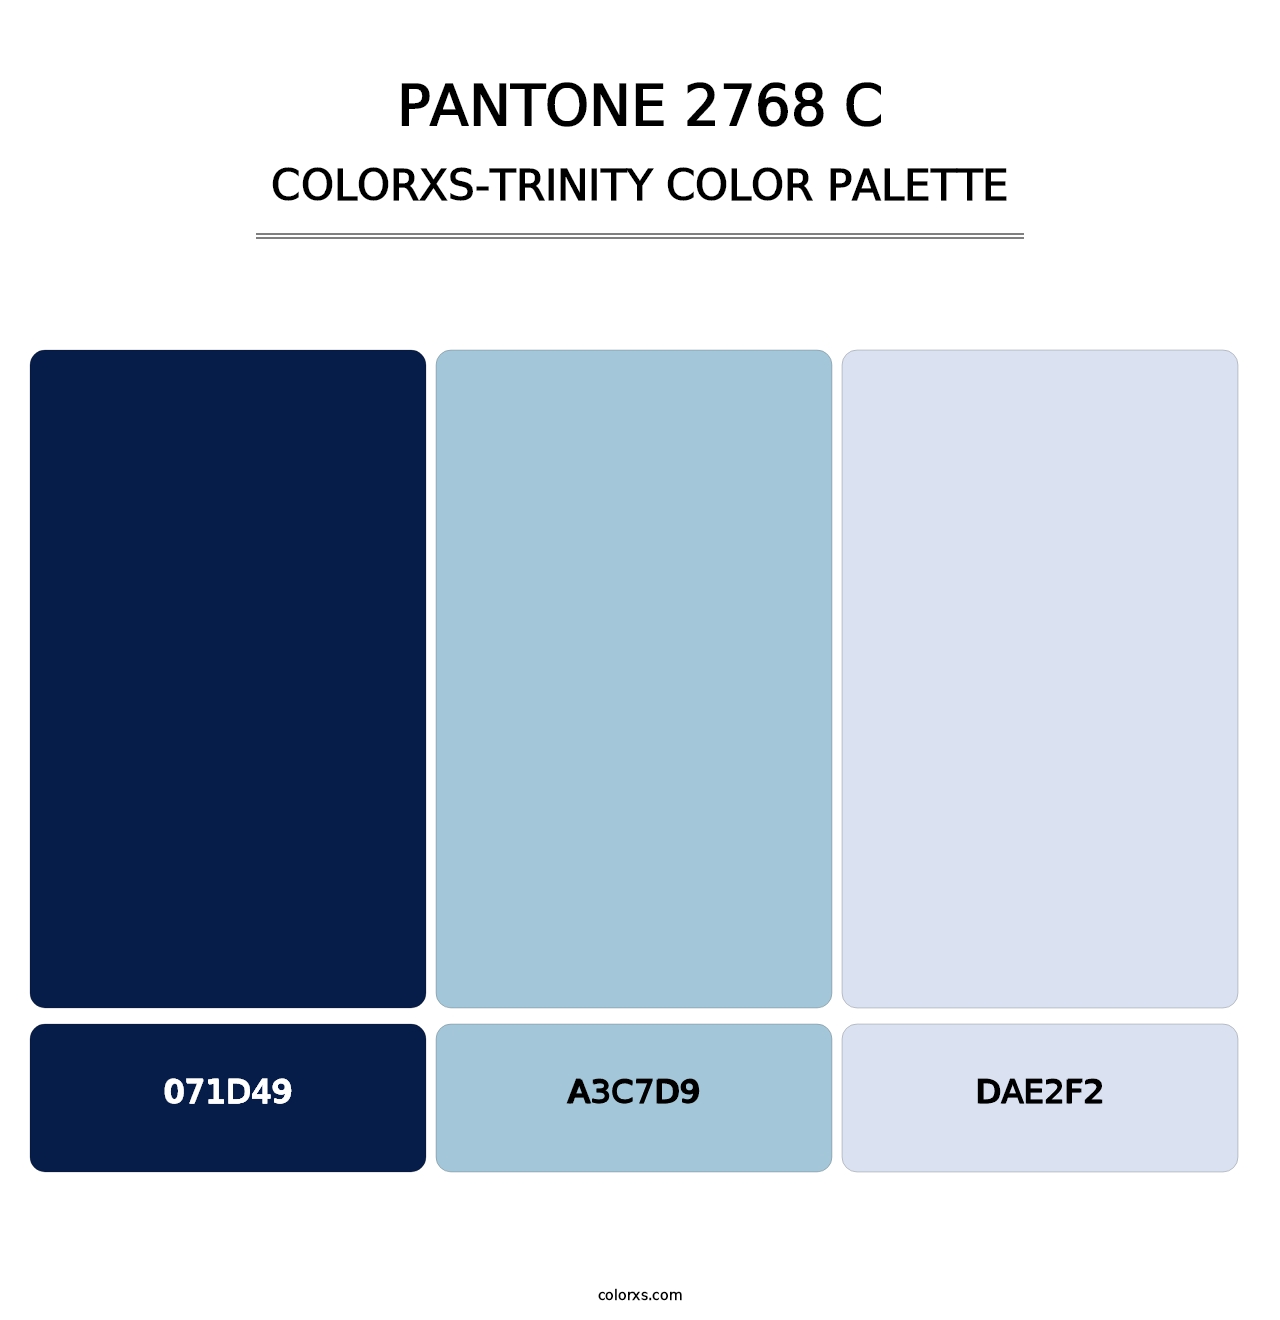 PANTONE 2768 C - Colorxs Trinity Palette